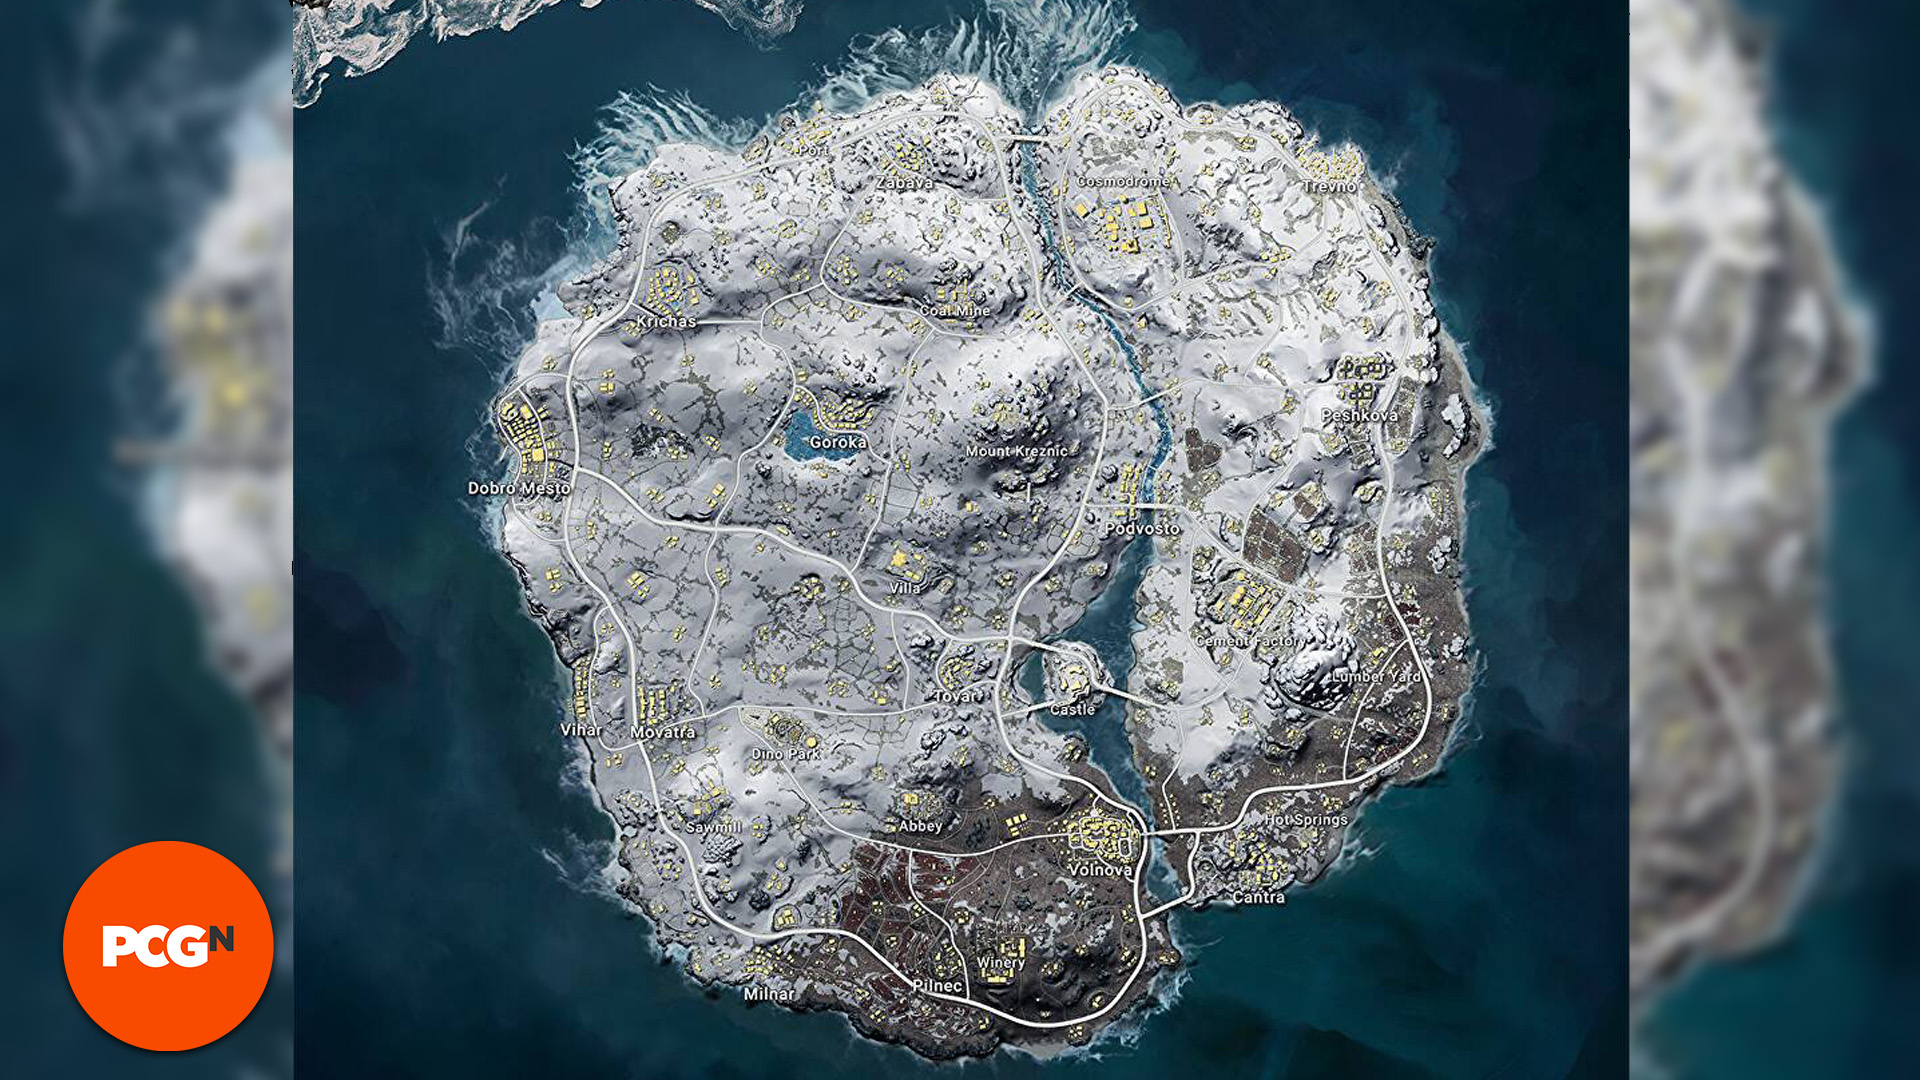 Playerunknowns Battlegrounds PUBG Map: a map view of Vikendi